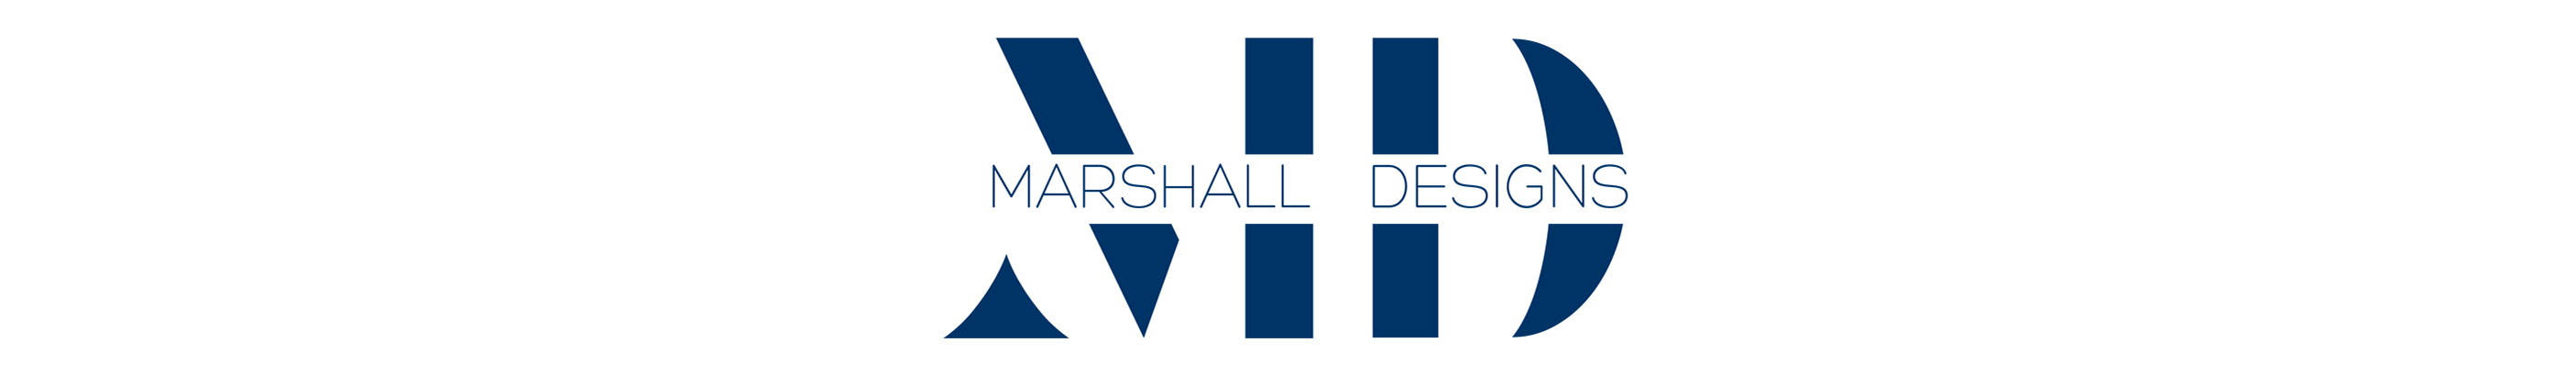 MARSHALL DESIGNS's profile banner